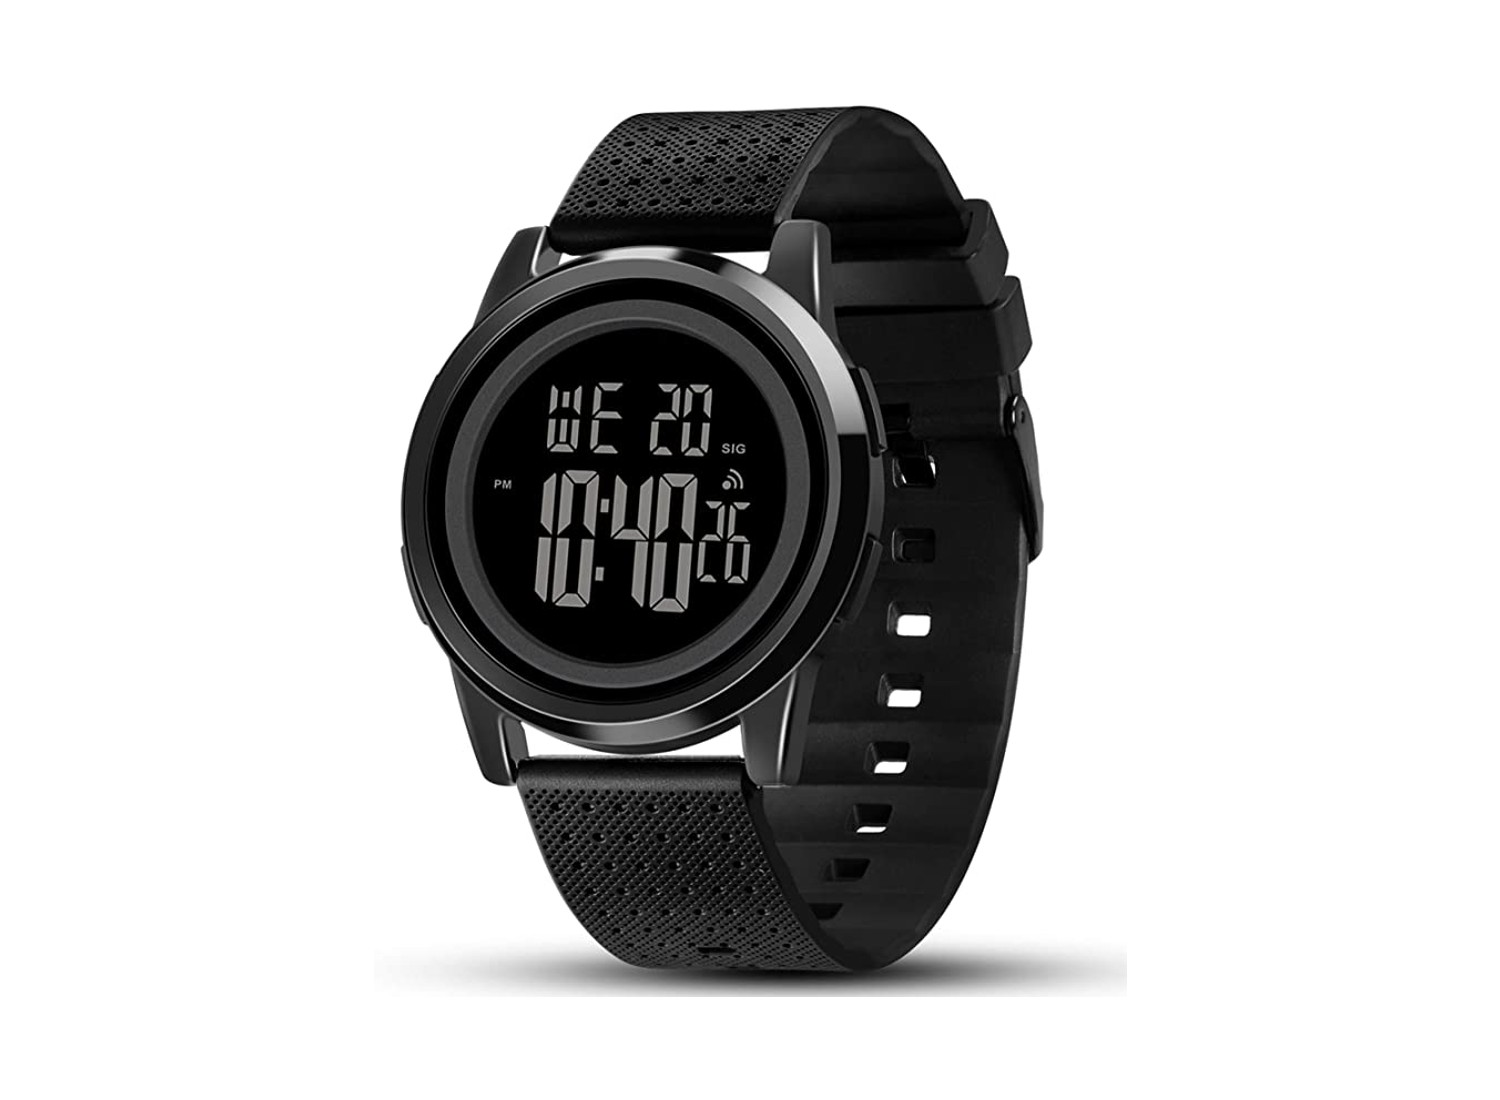 Digital Sports Watch Water Resistant Outdoor Electronic Ultra Thin Waterproof LED Military Back Light Black Men's Wristwatch 1206